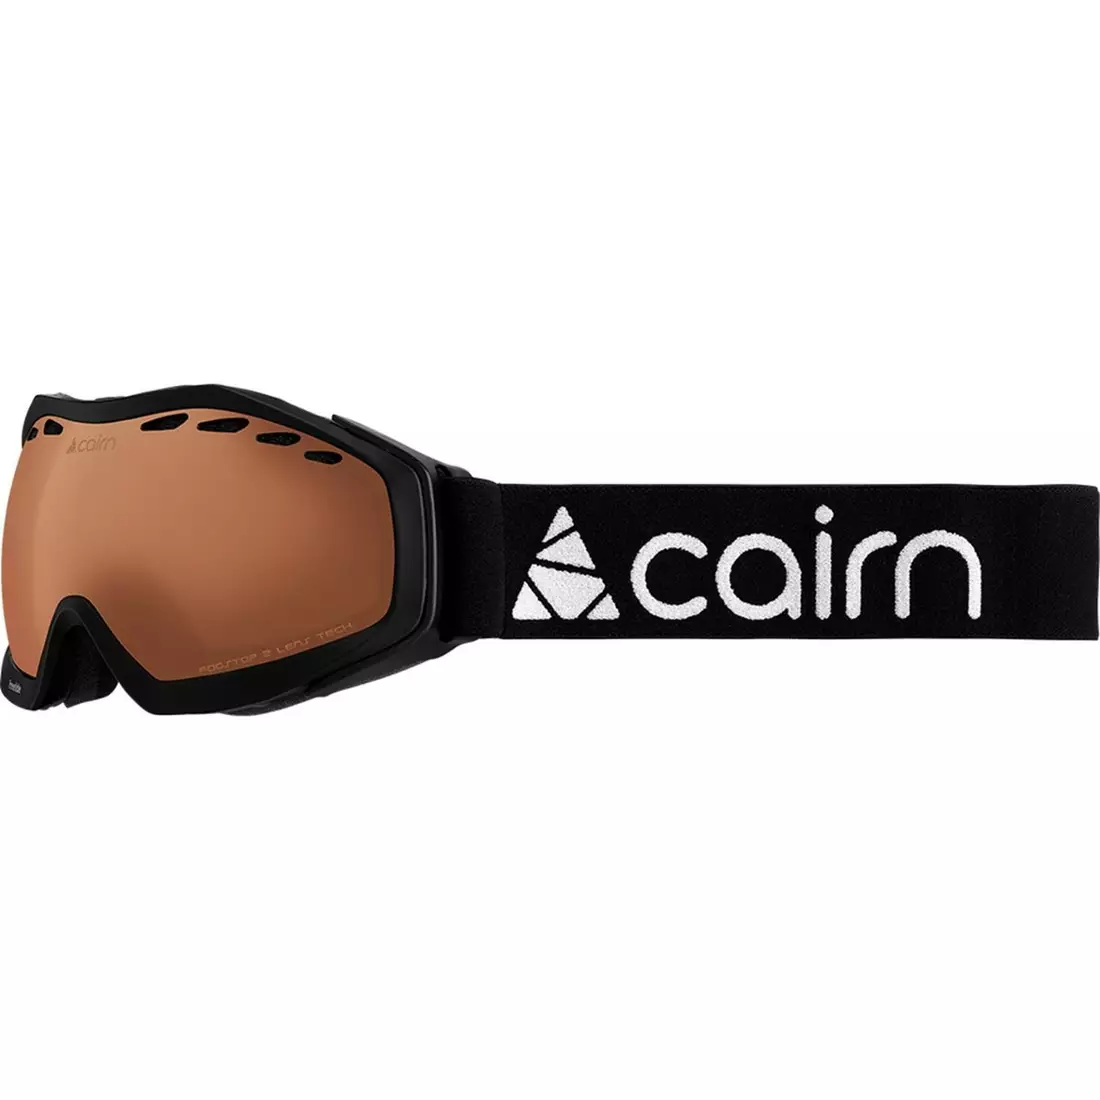 CAIRN ski/snowboard goggles FREERIDE 202 PHOTOCHROMIC, Black, 580068202